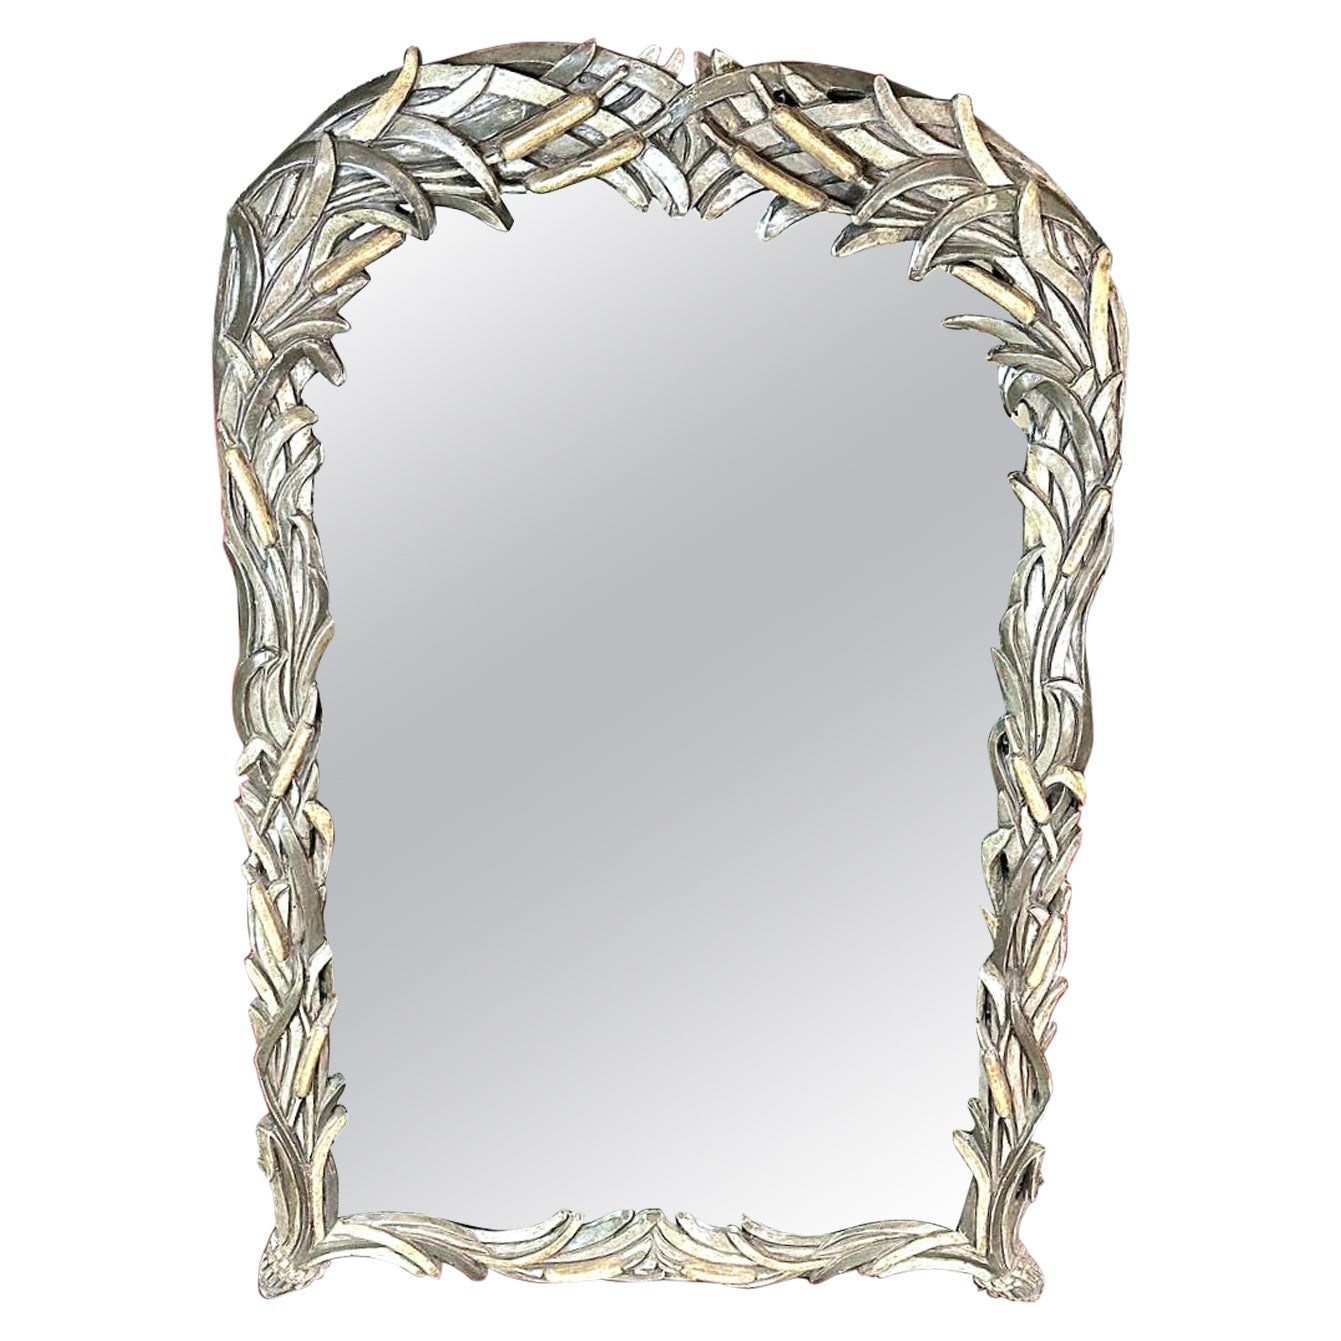 Art Nouveau Serge Roche Palm Beach Style Faux Bois Wall or Mantle Mirror  For Sale